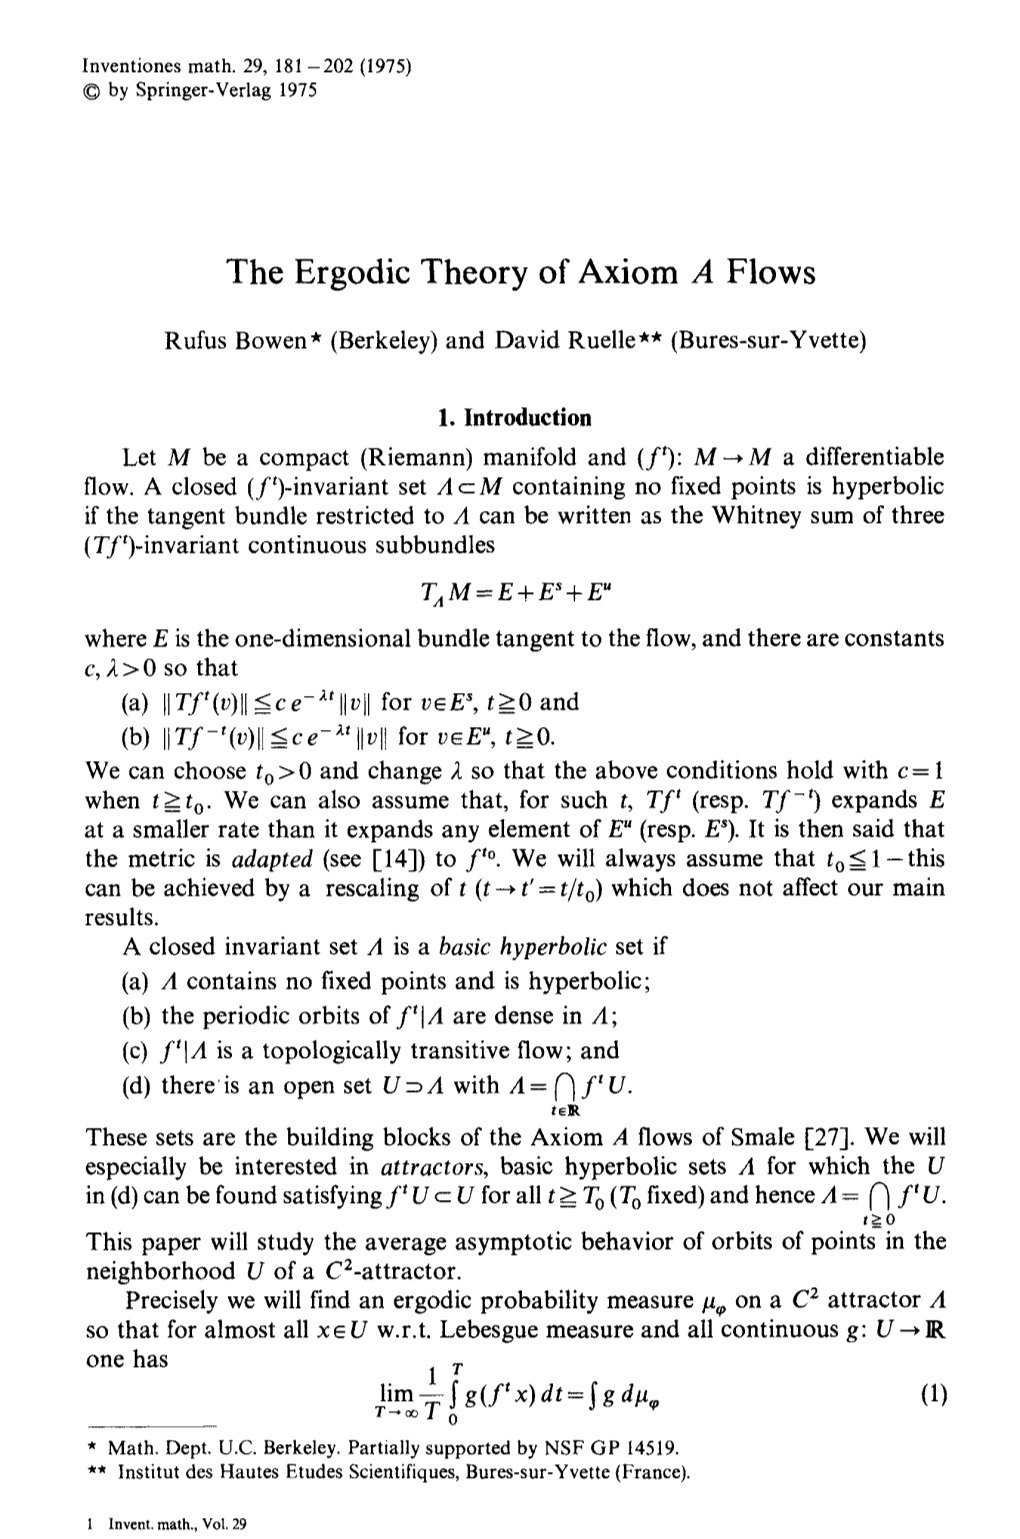 The Ergodic Theory of Axiom a Flows